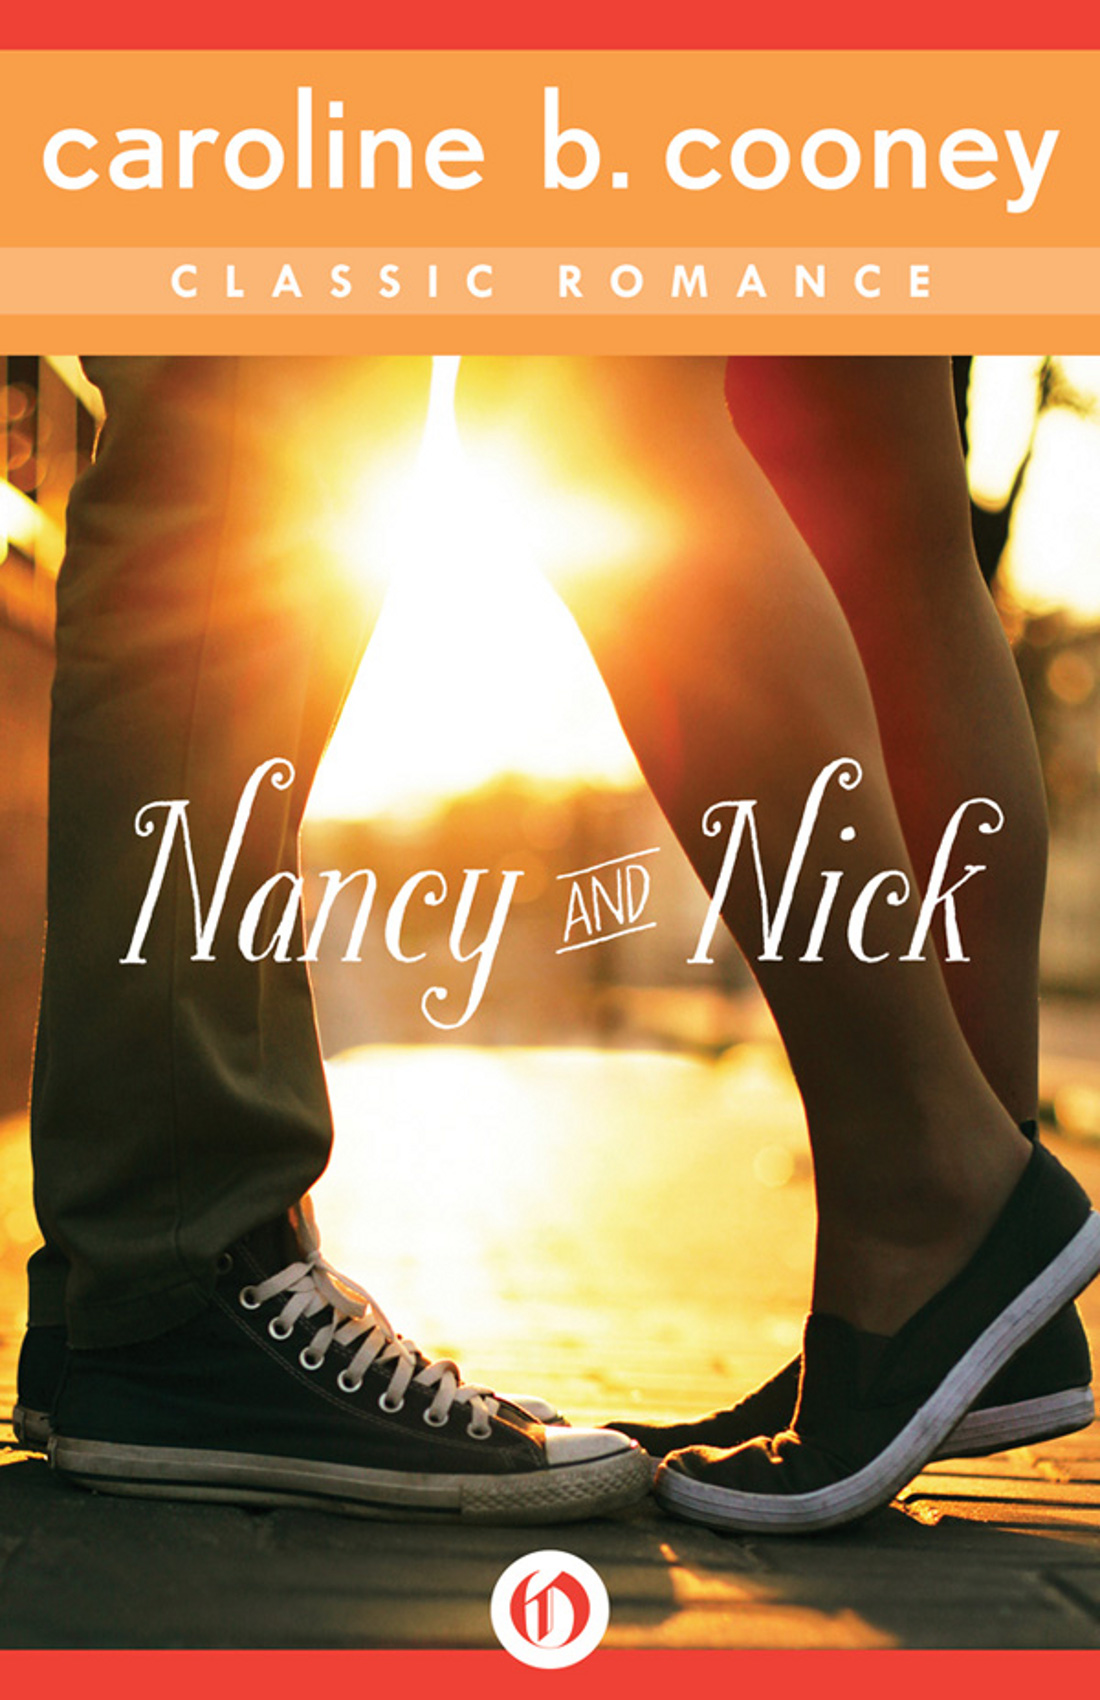 Nancy and Nick by Caroline B. Cooney